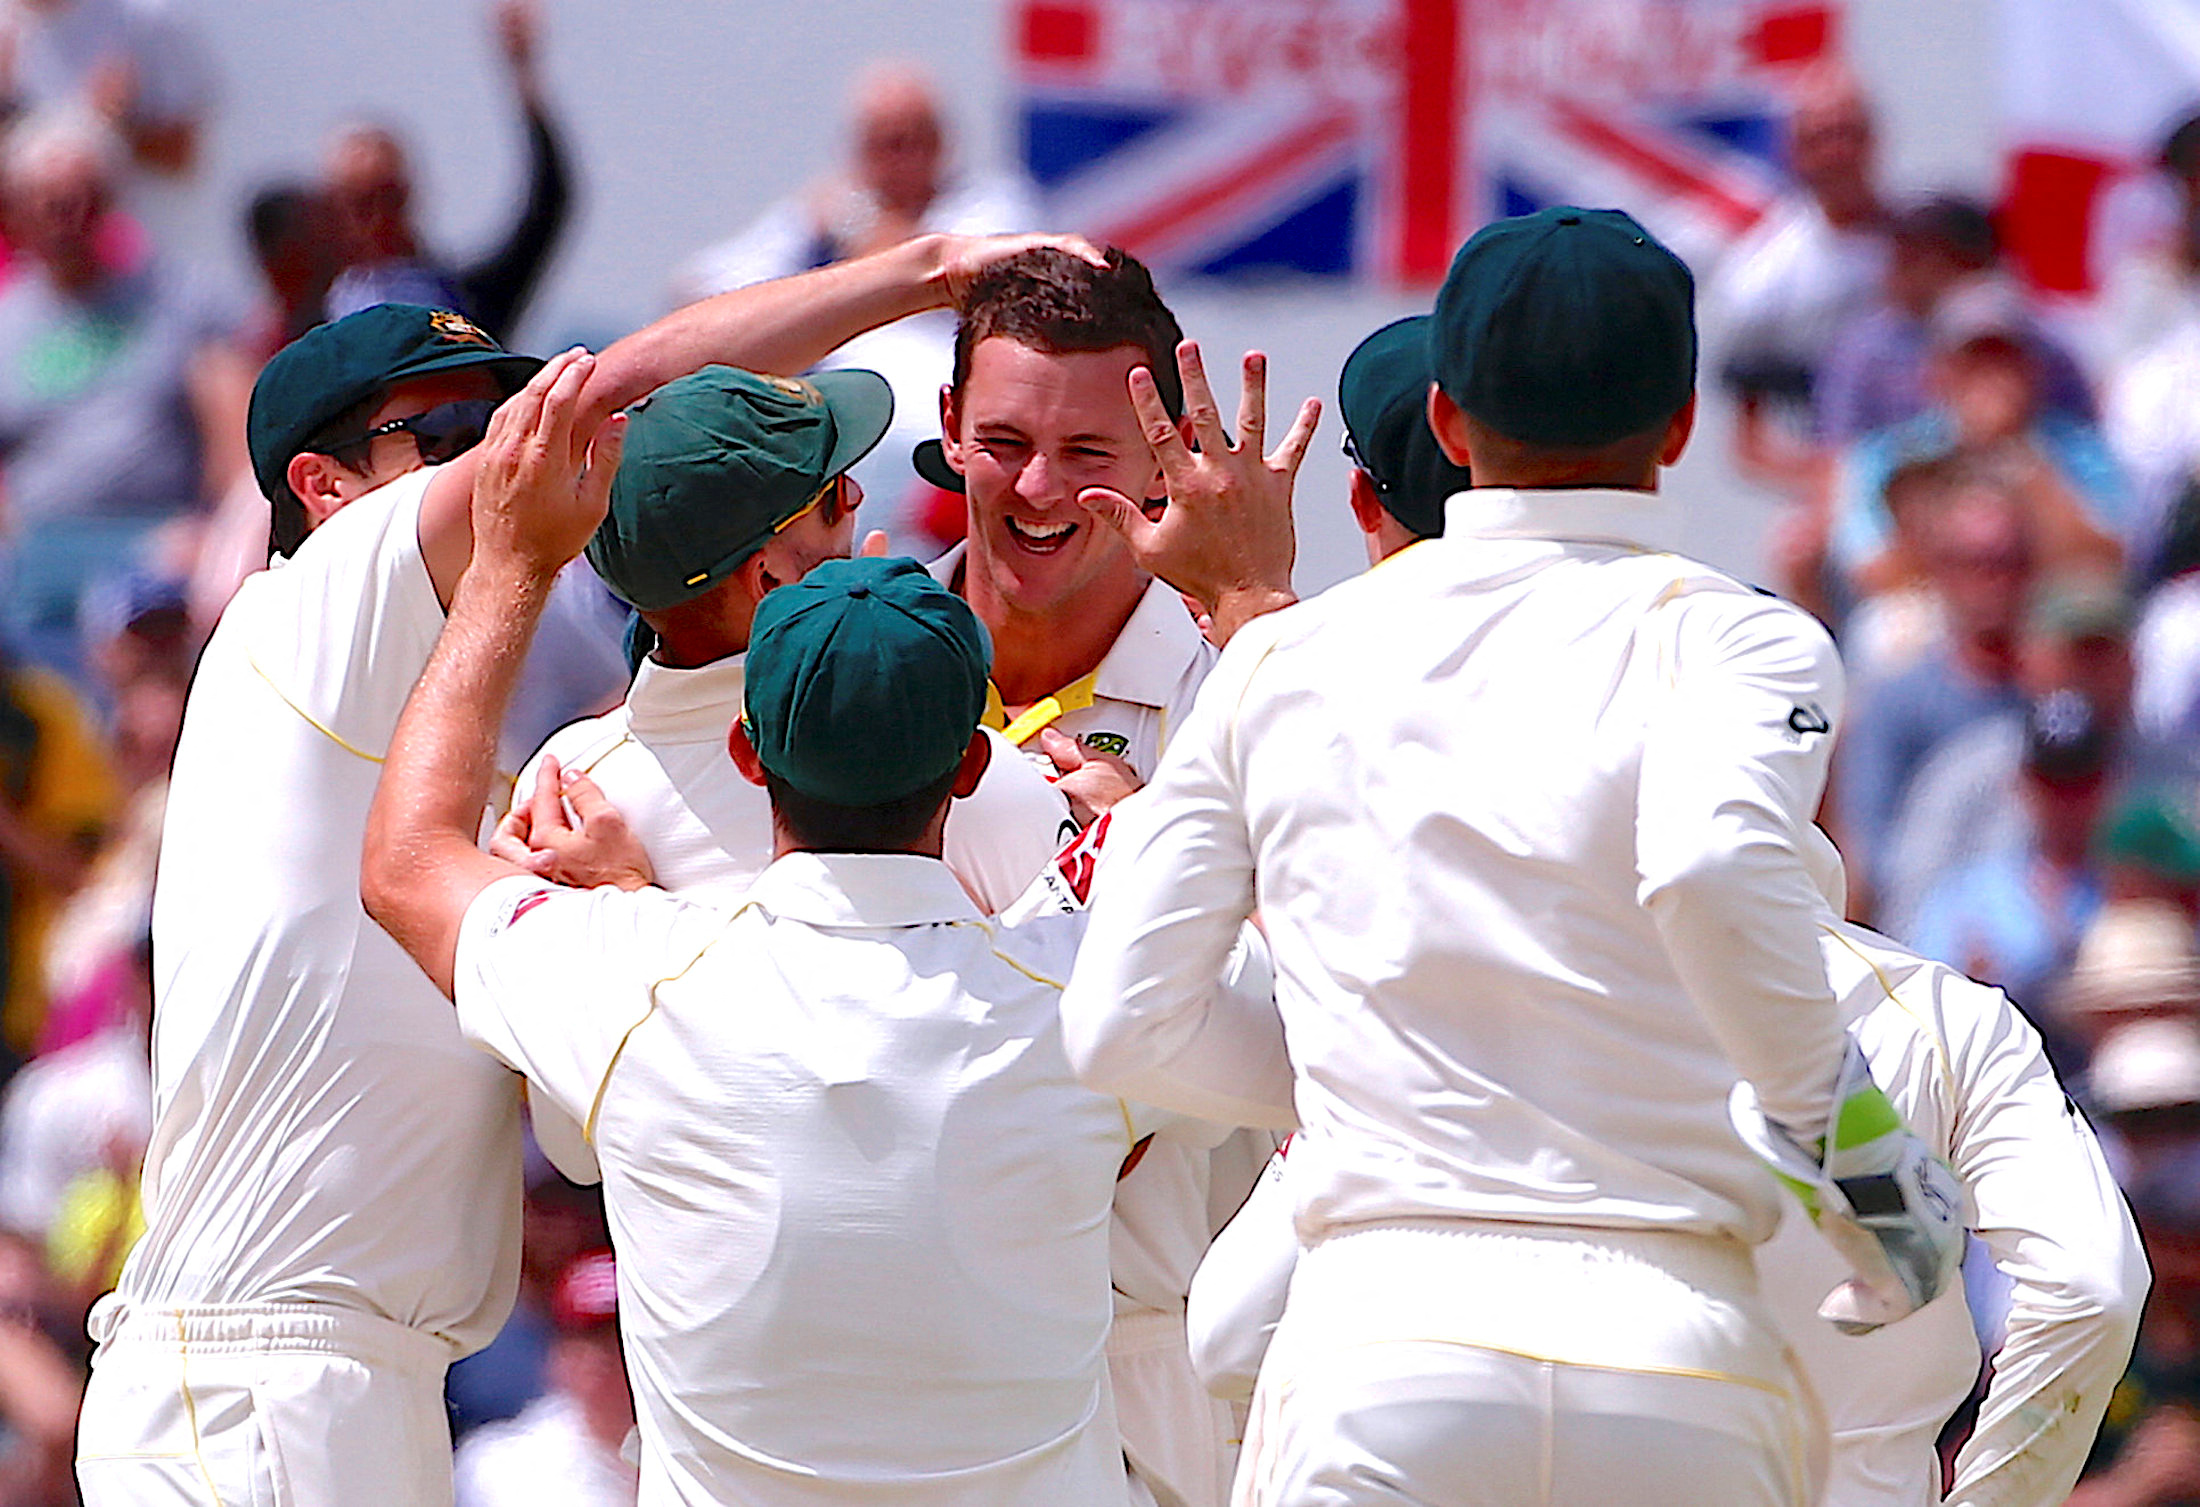 Cricket - Australia v England - Ashes test match